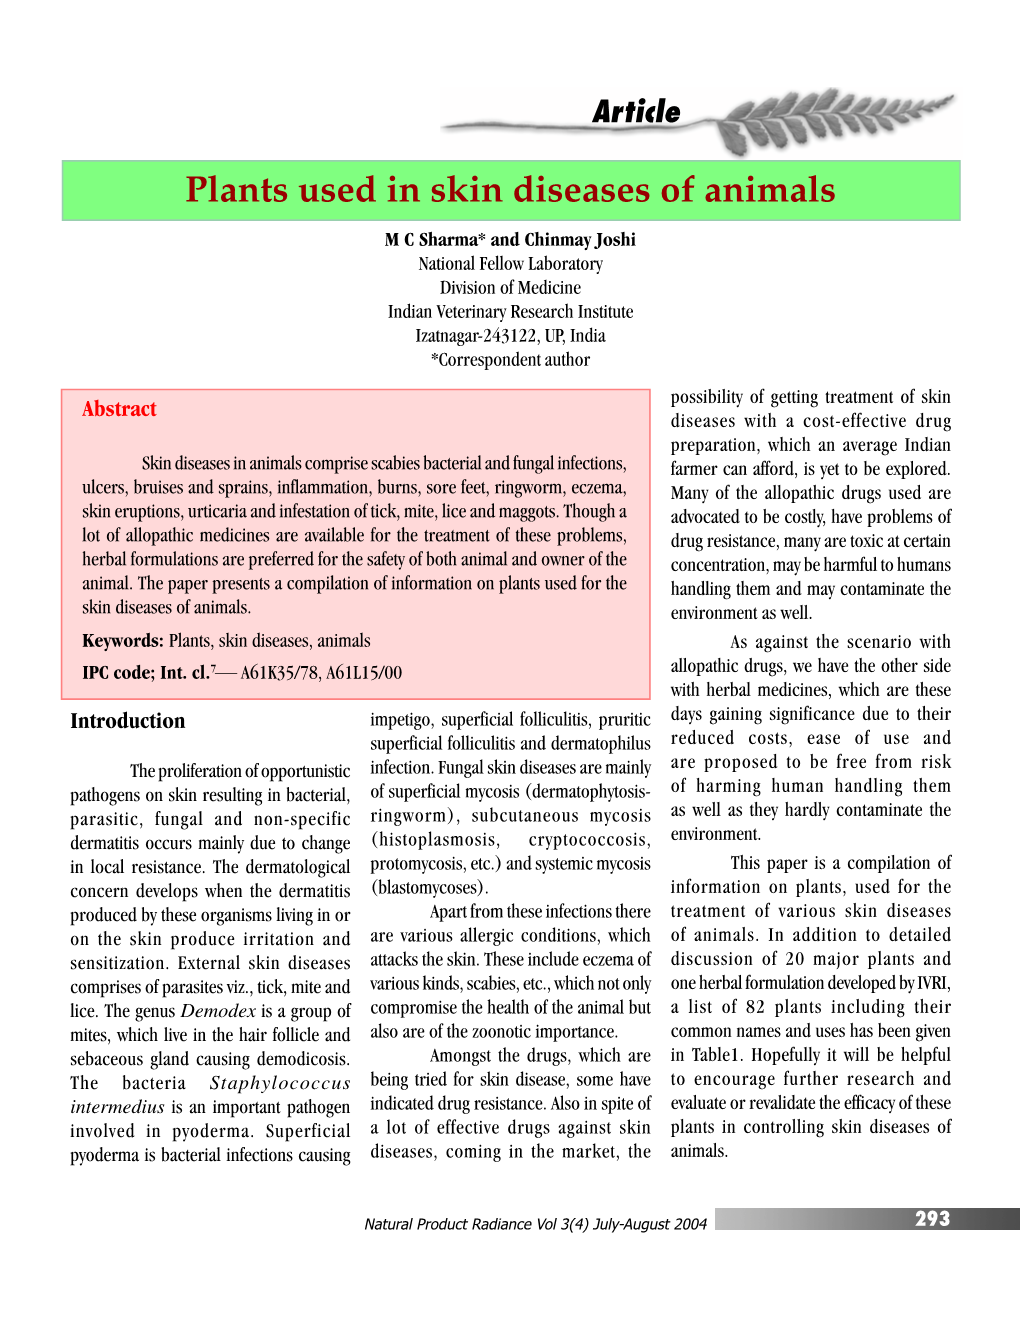 Plants Used in Skin Diseases of Animals